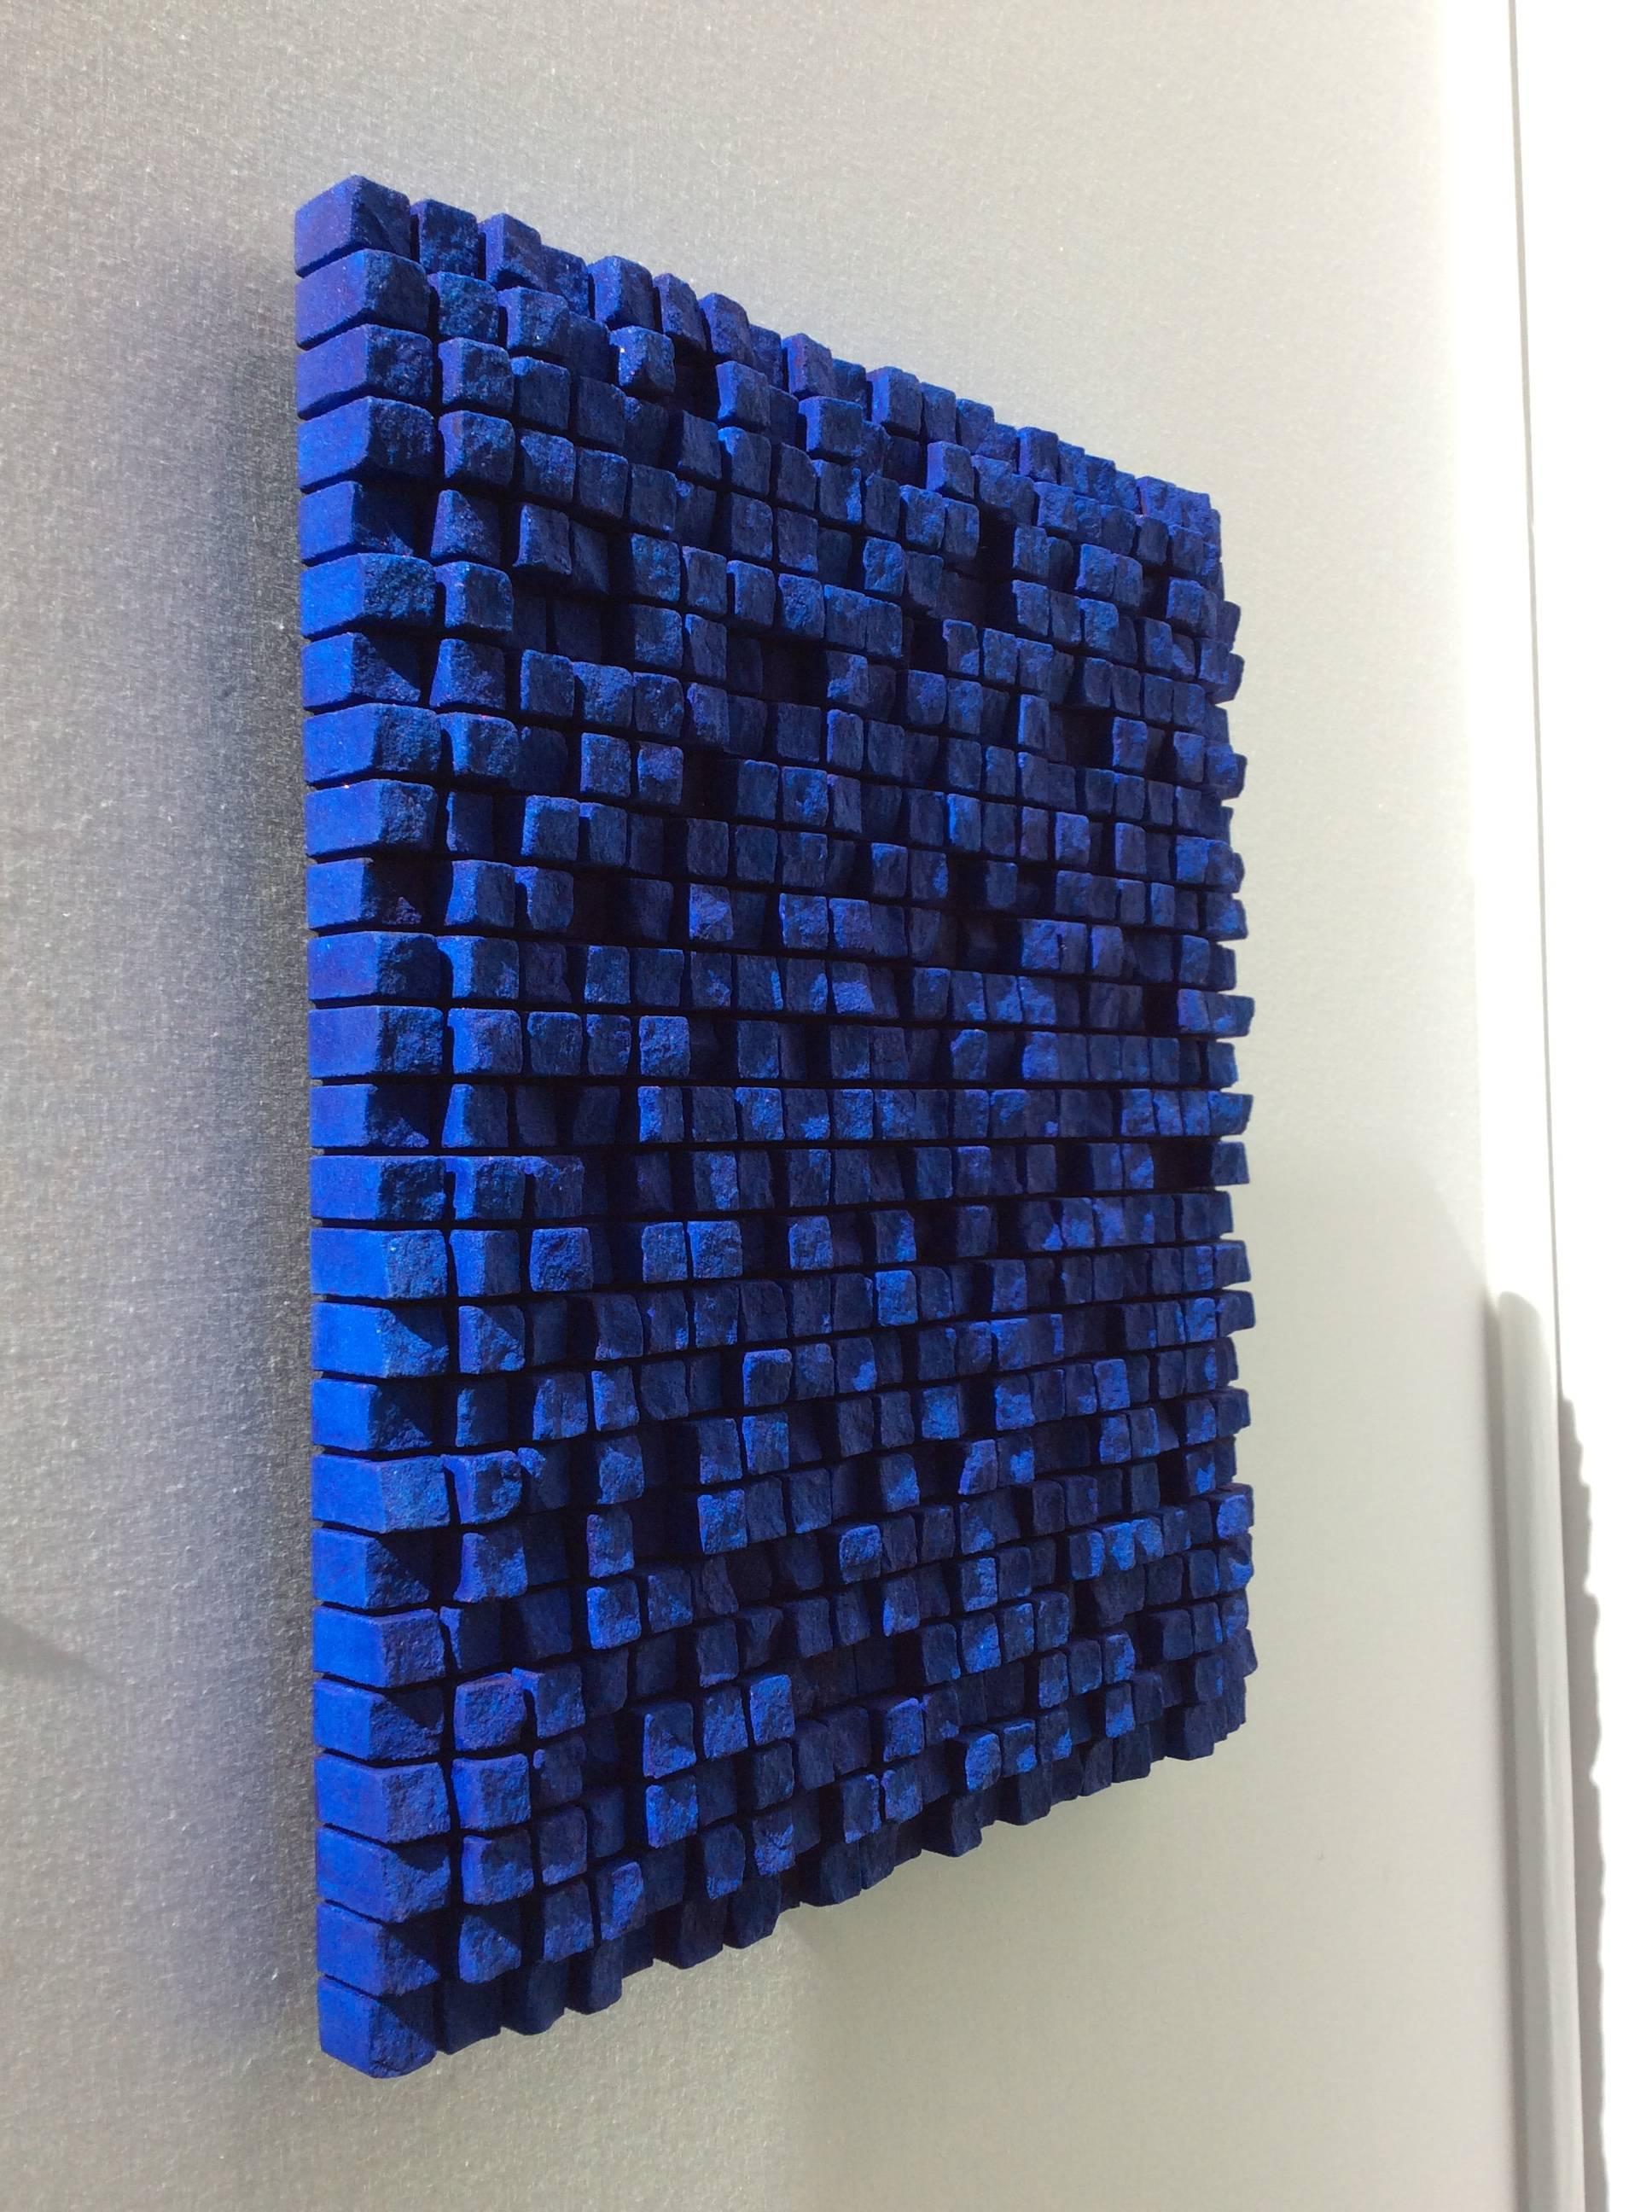 Untitled (Blue Marble) - Gray Abstract Sculpture by Dieter Kränzlein